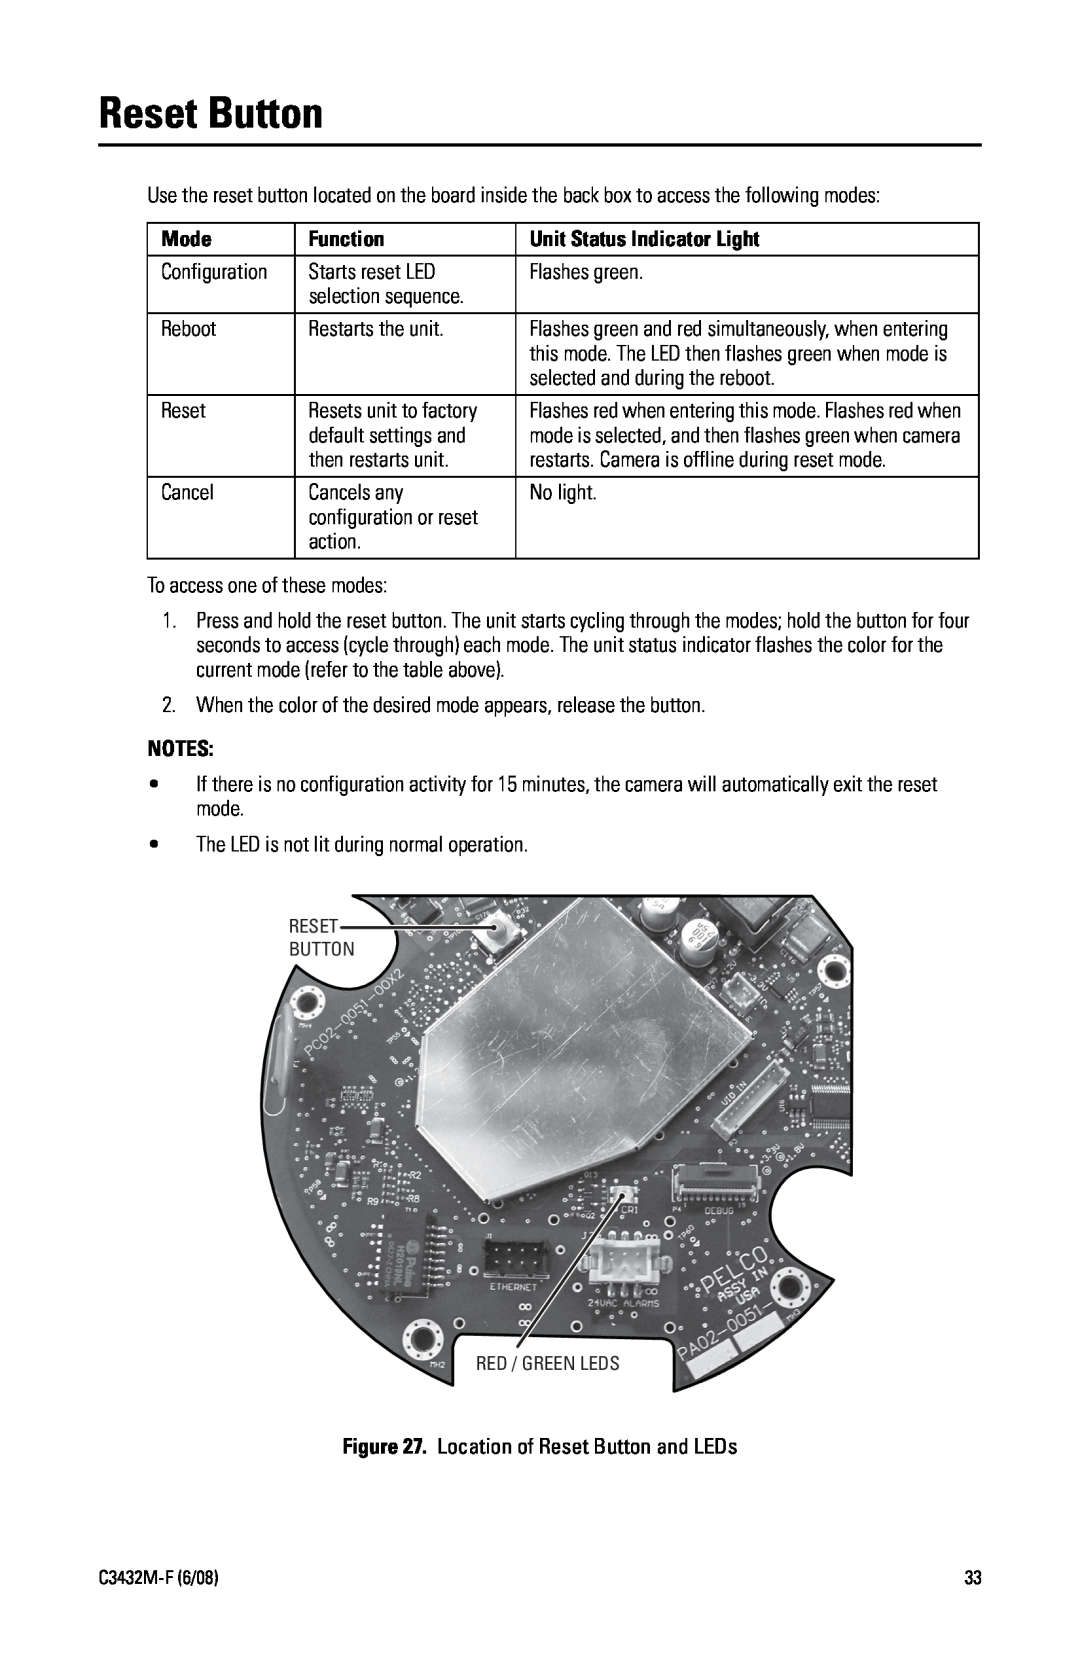 Pelco C3432M-F manual Reset Button, Mode, Unit Status Indicator Light, Function 